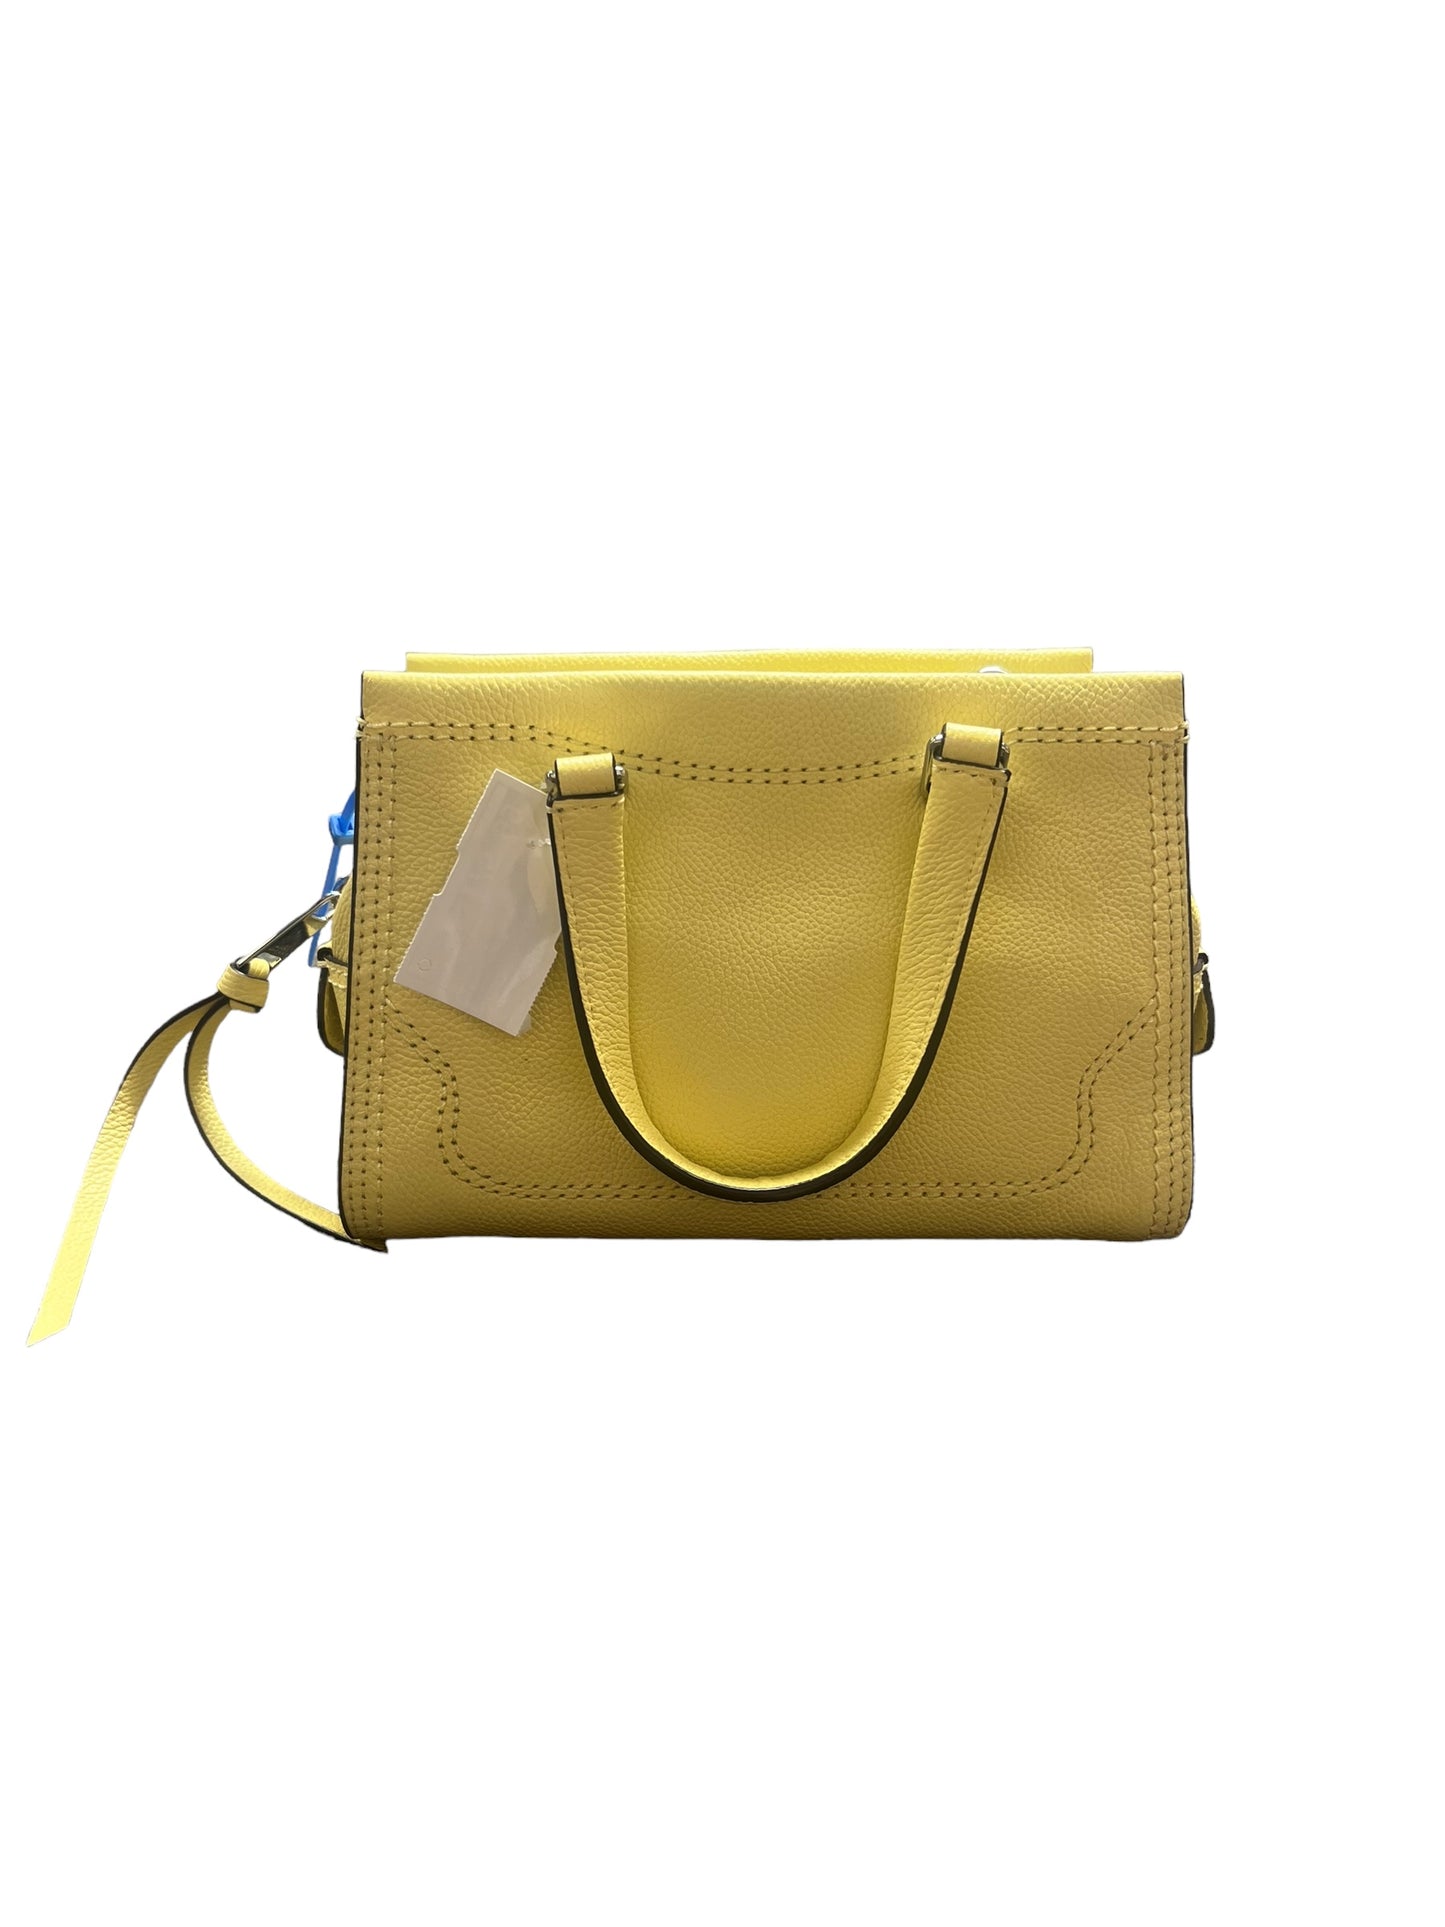 Handbag Designer Marc Jacobs, Size Small